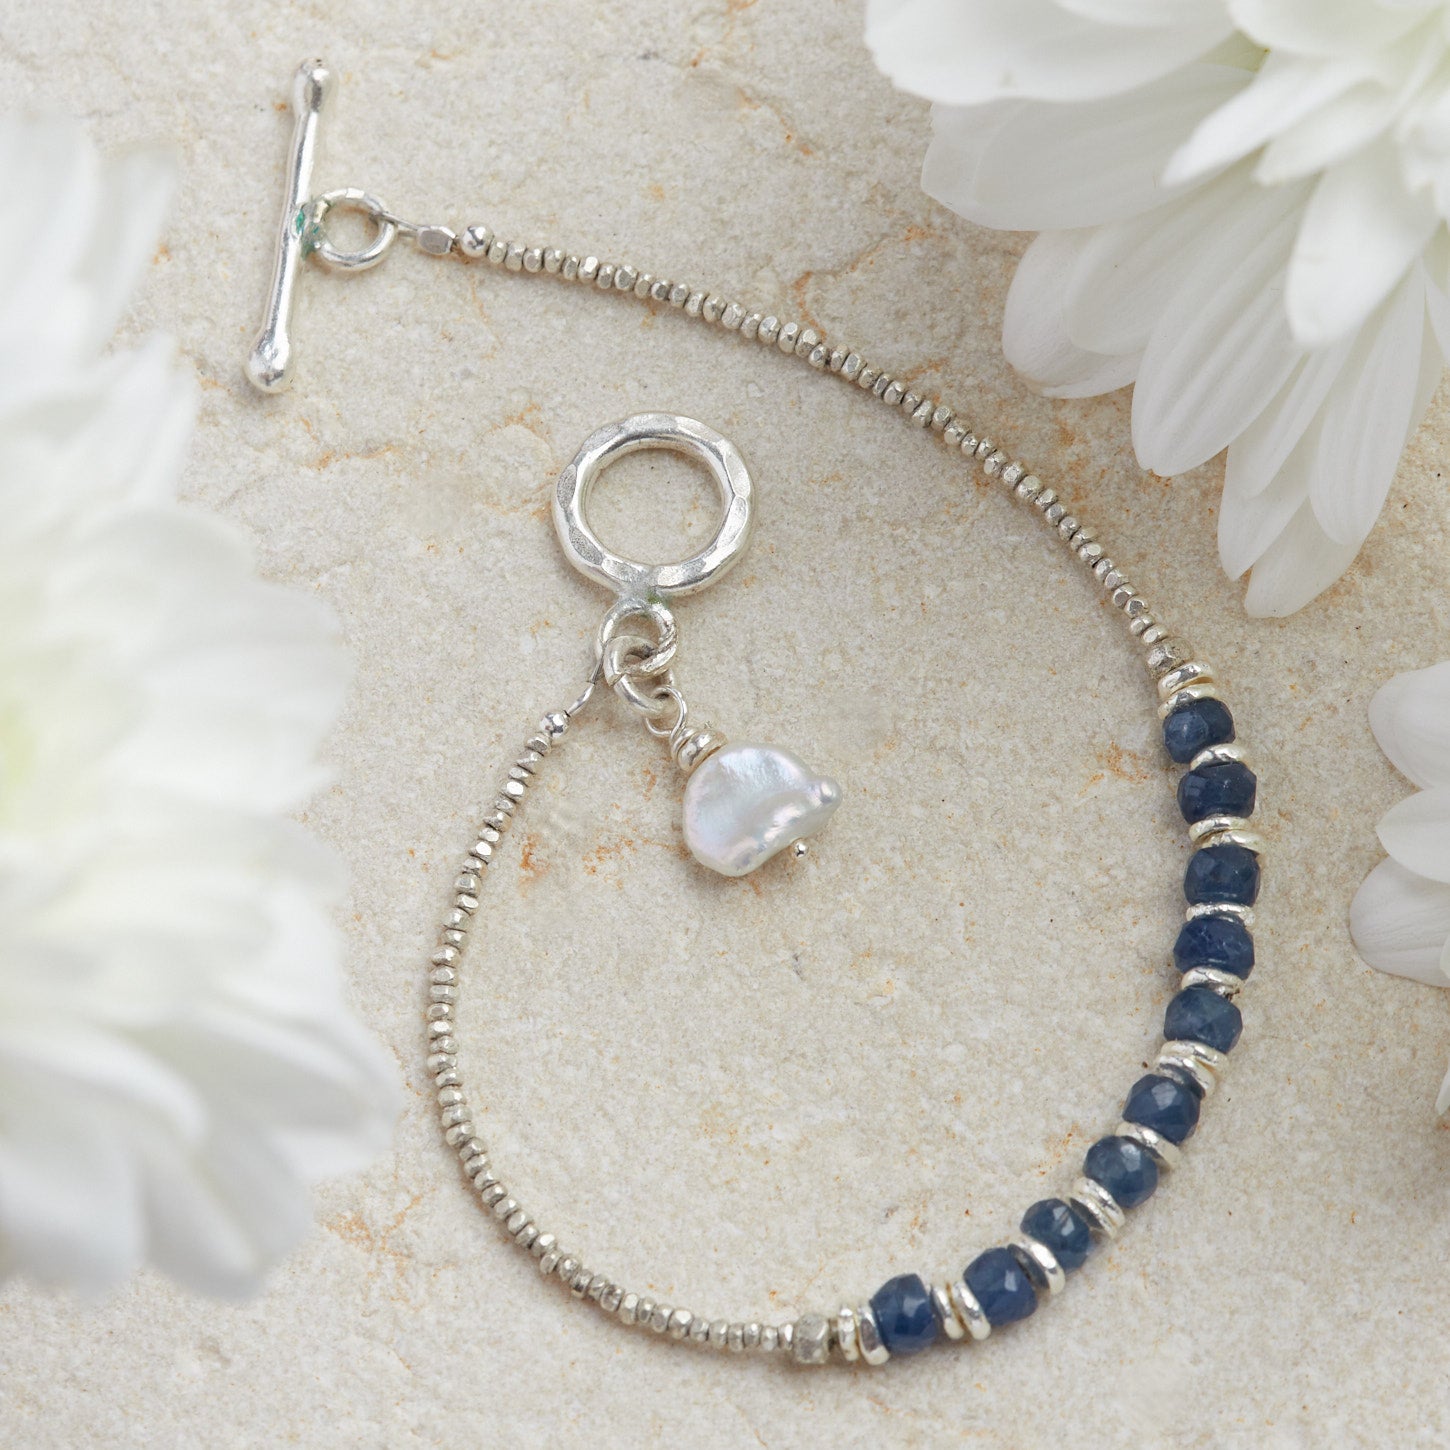 Celestial Blue Sapphire Bracelet